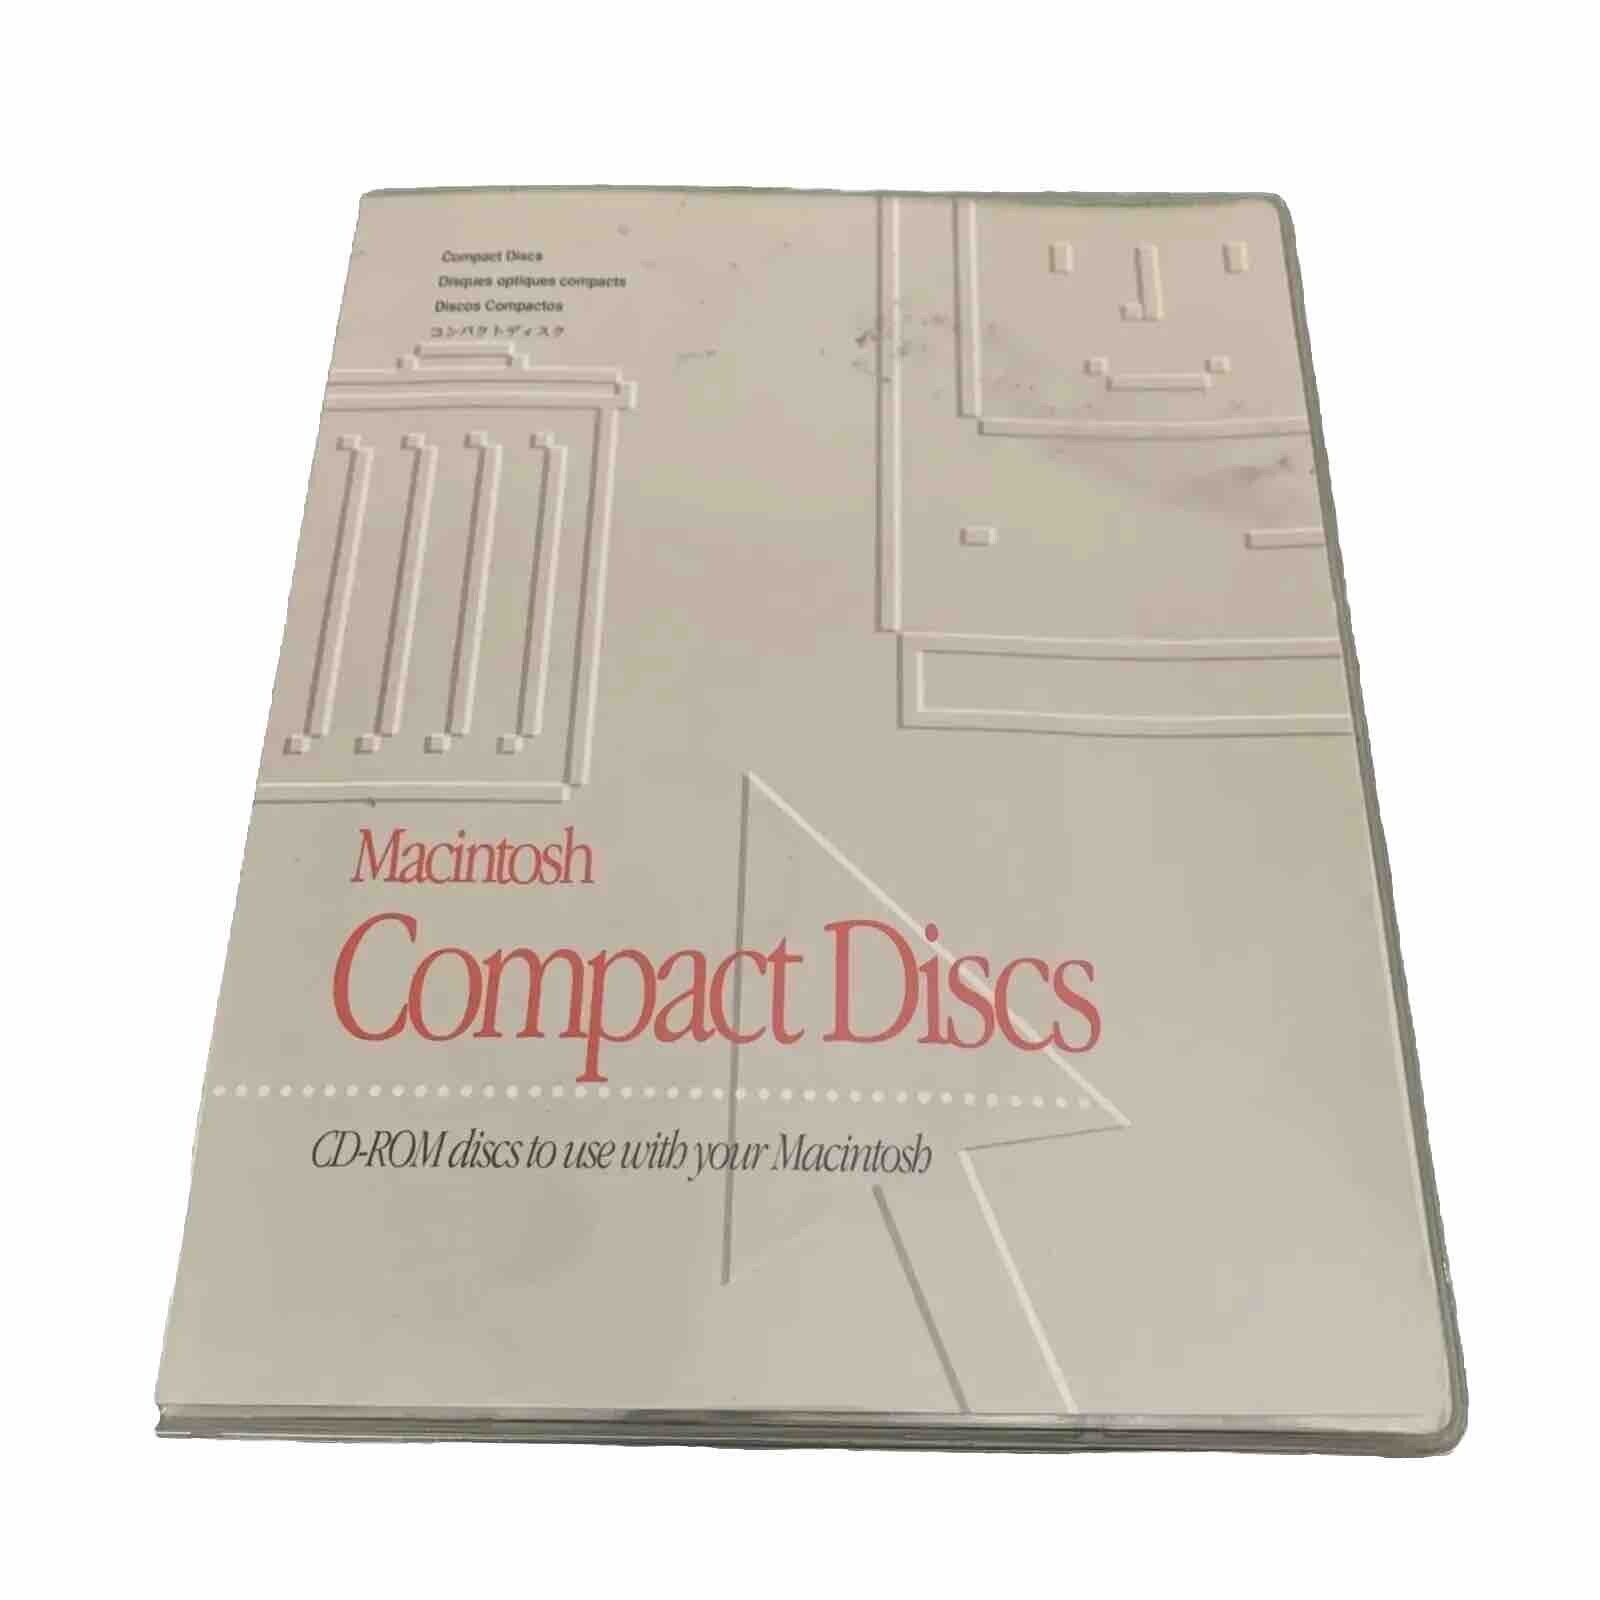 Vintage Macintosh 1990s CD-ROM Compact Discs Folder with 8 Discs